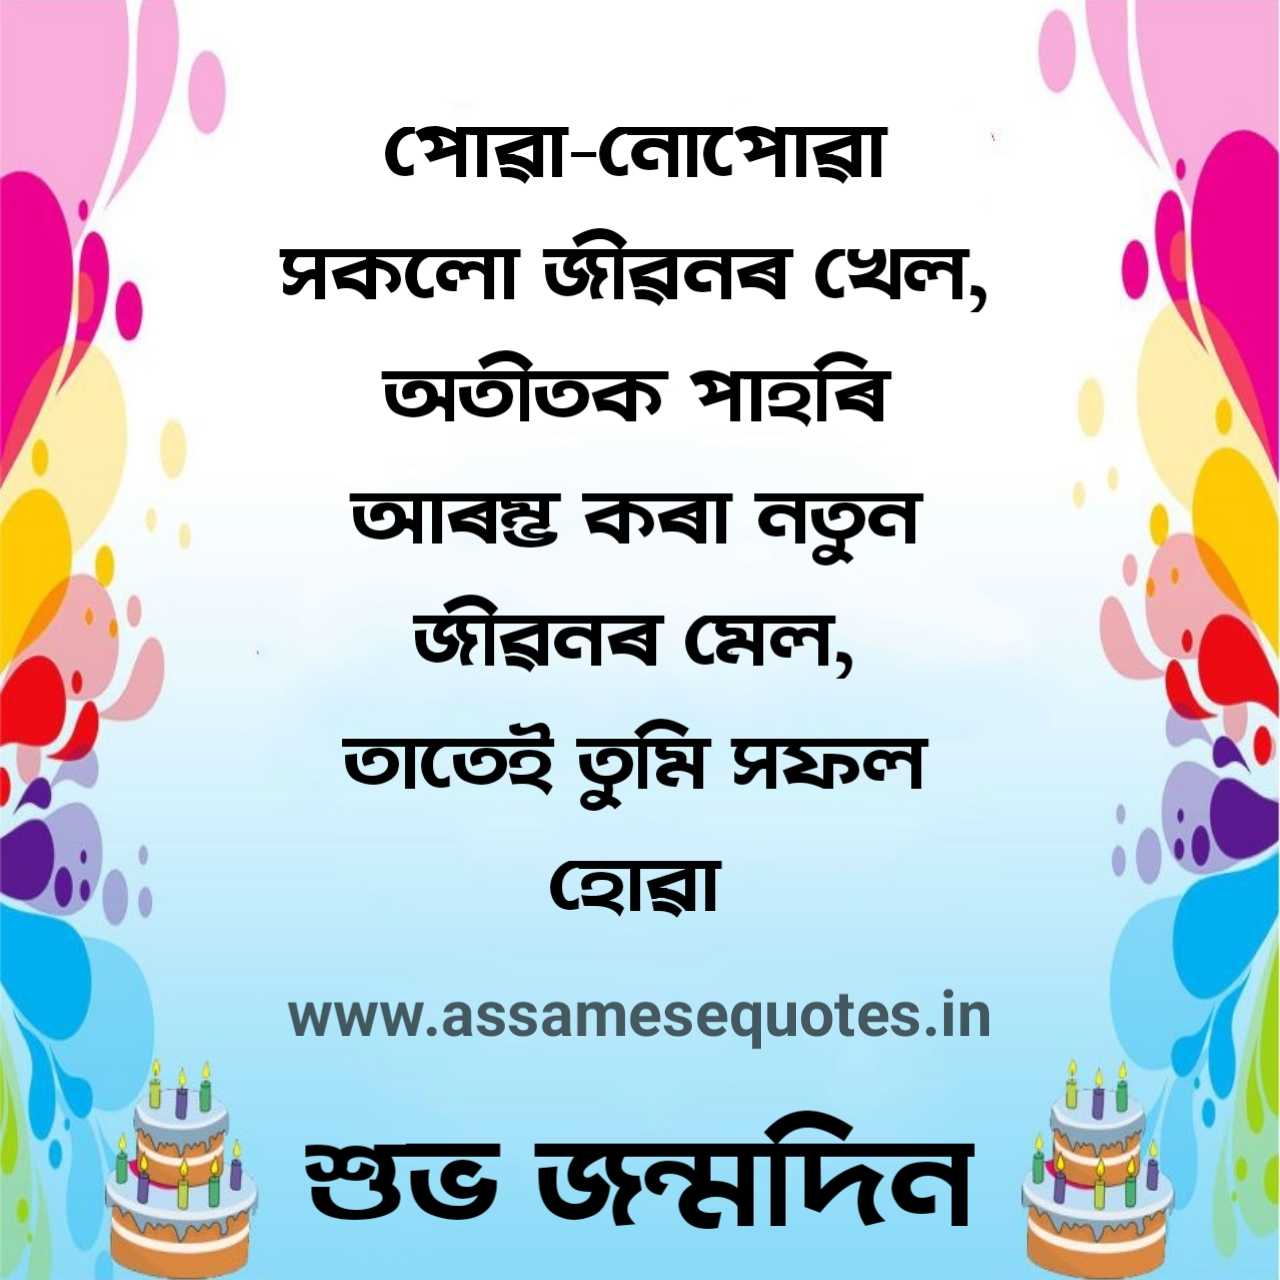 Birthday wish in assamese language